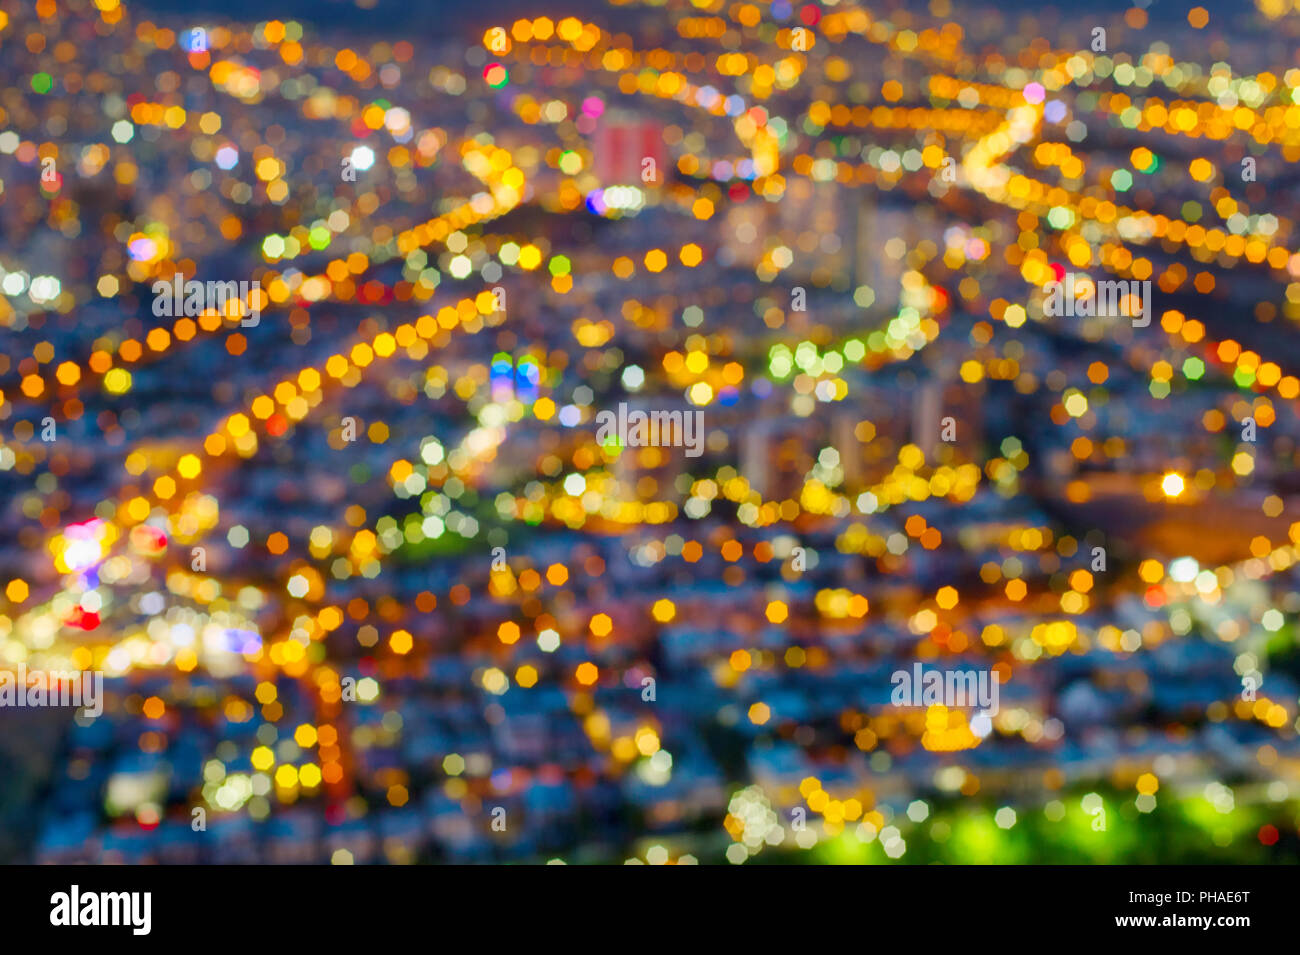 Urban city lens blur background Stock Photo